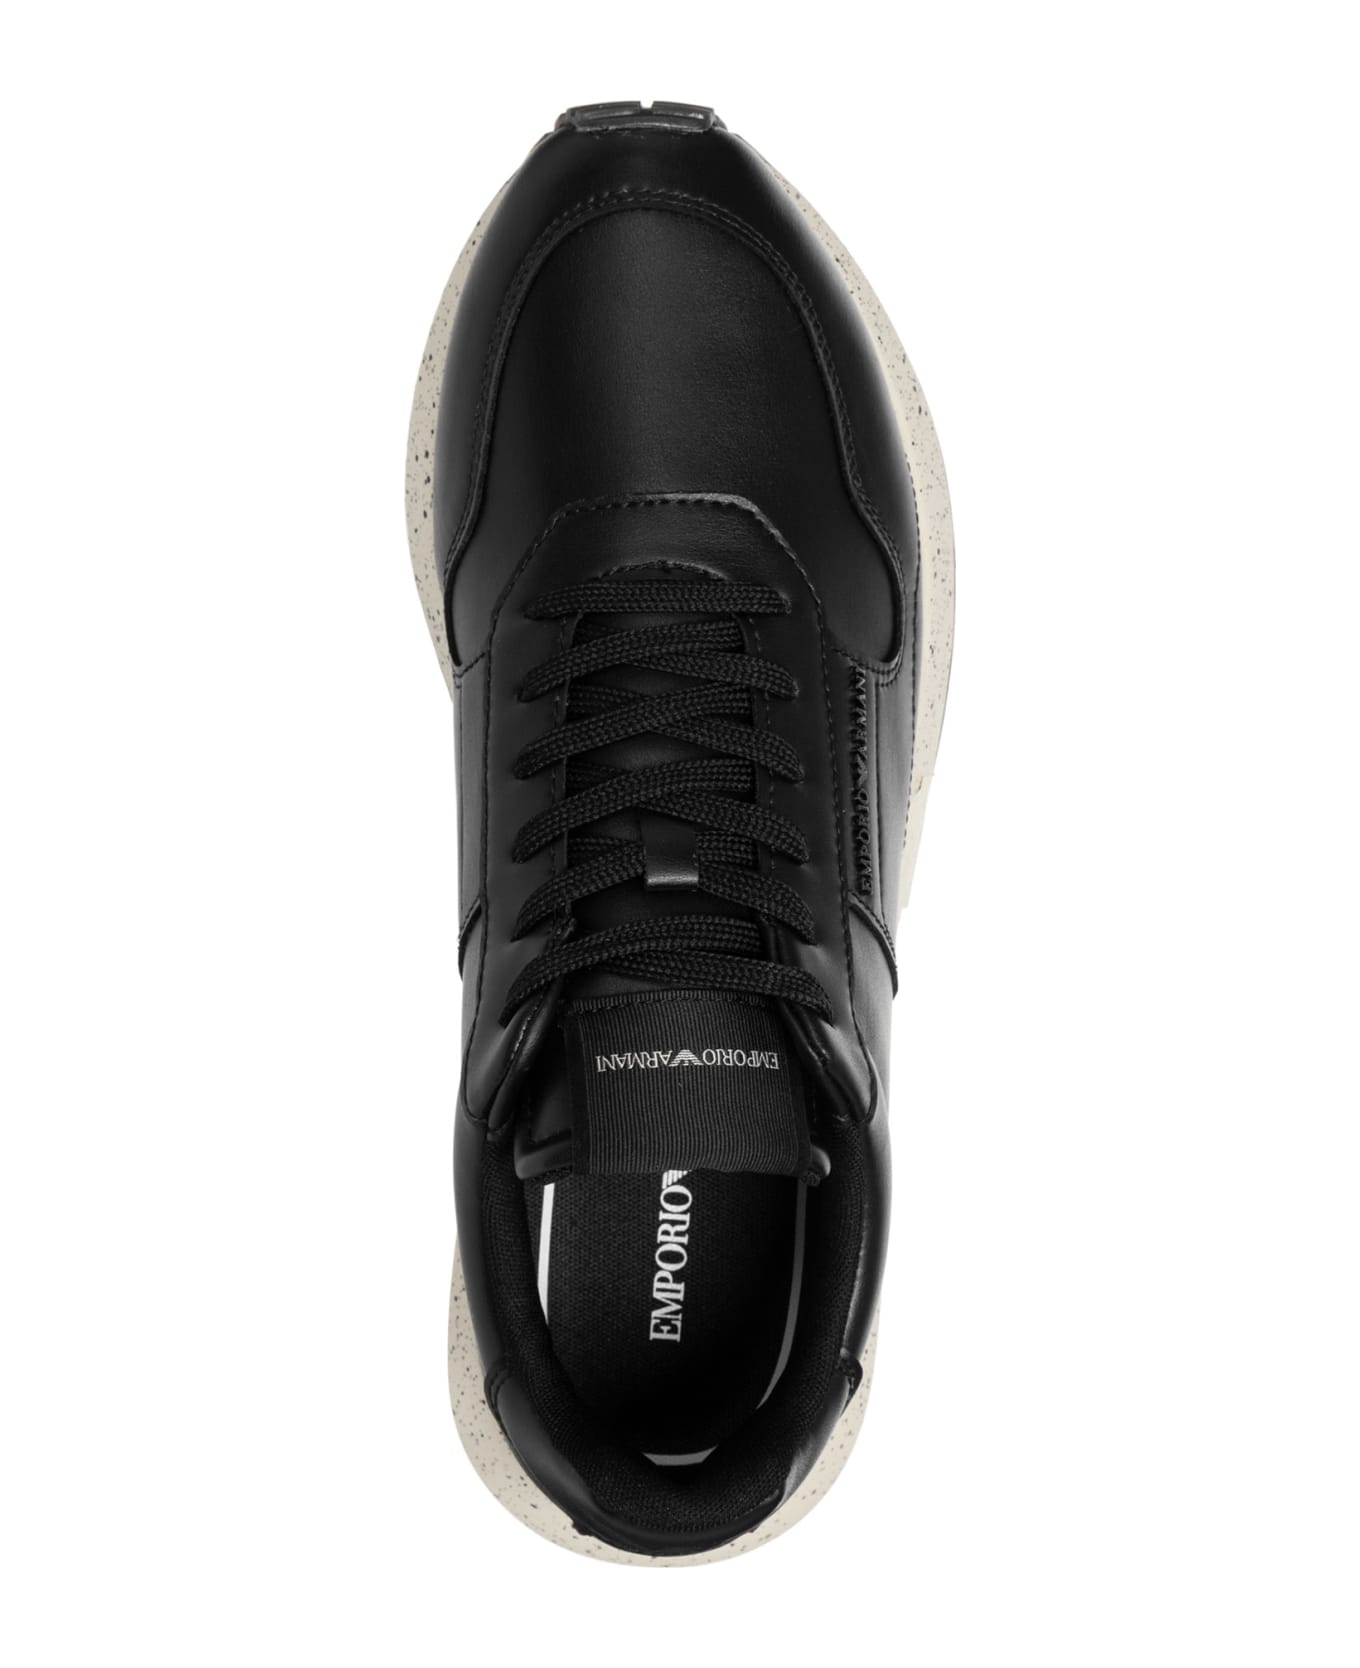 Emporio Armani Leather Sneakers - black